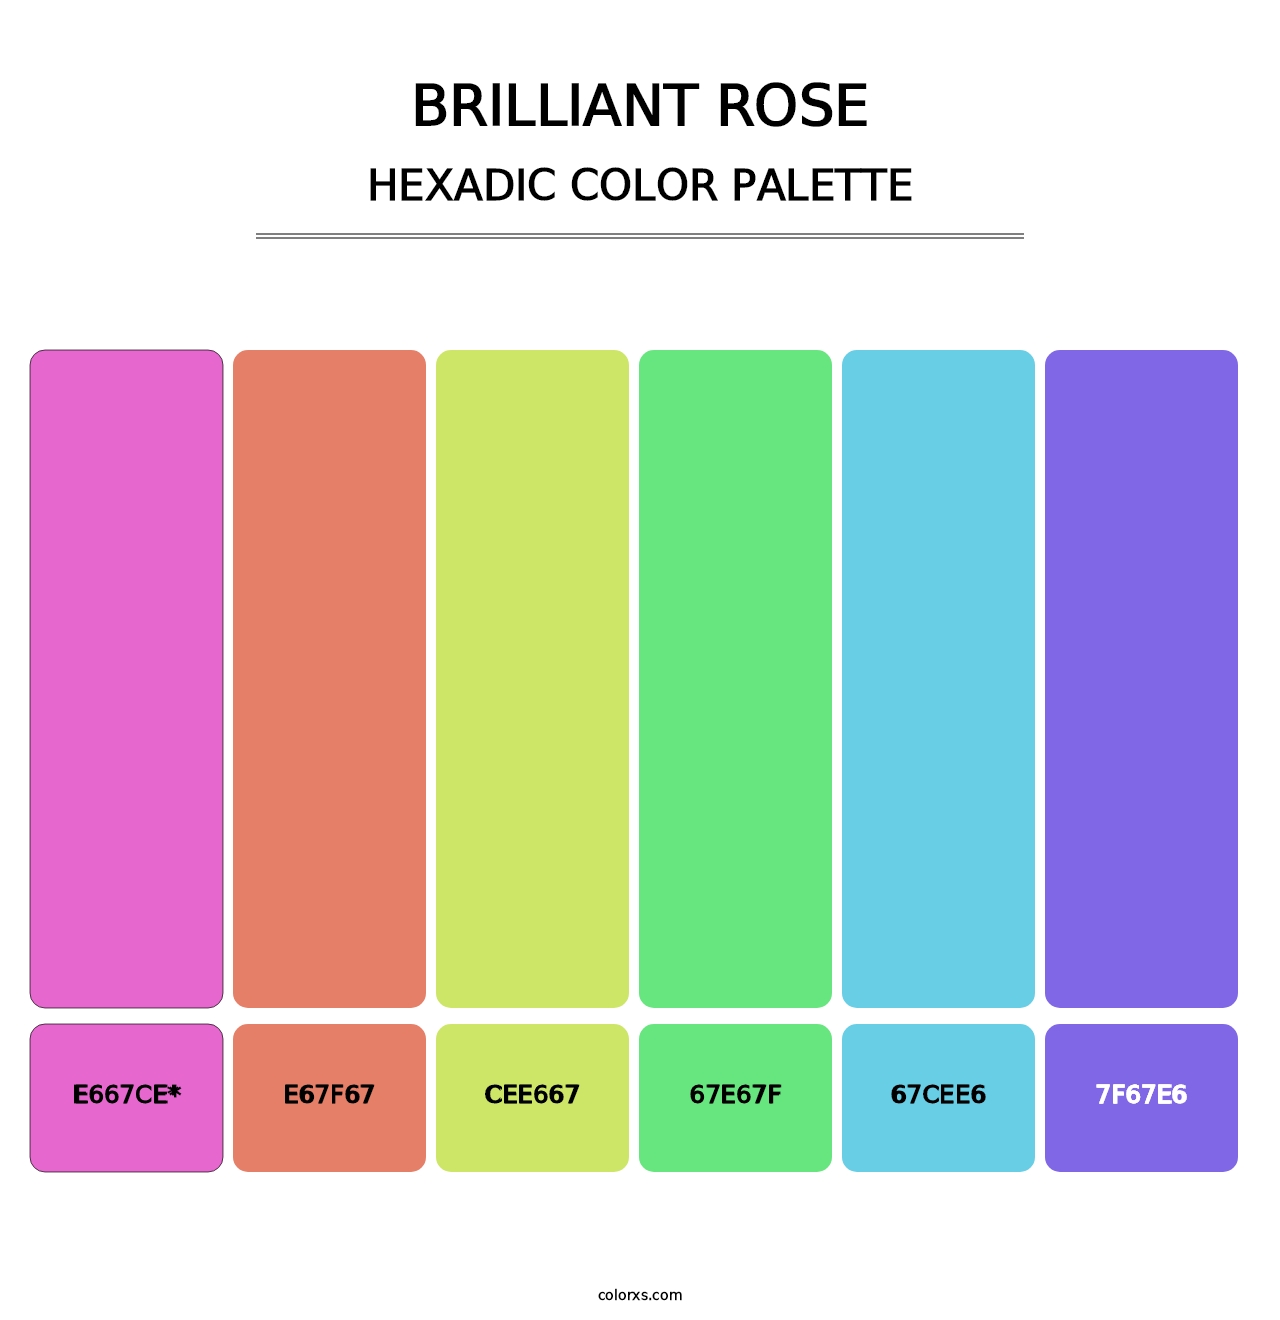 Brilliant Rose - Hexadic Color Palette